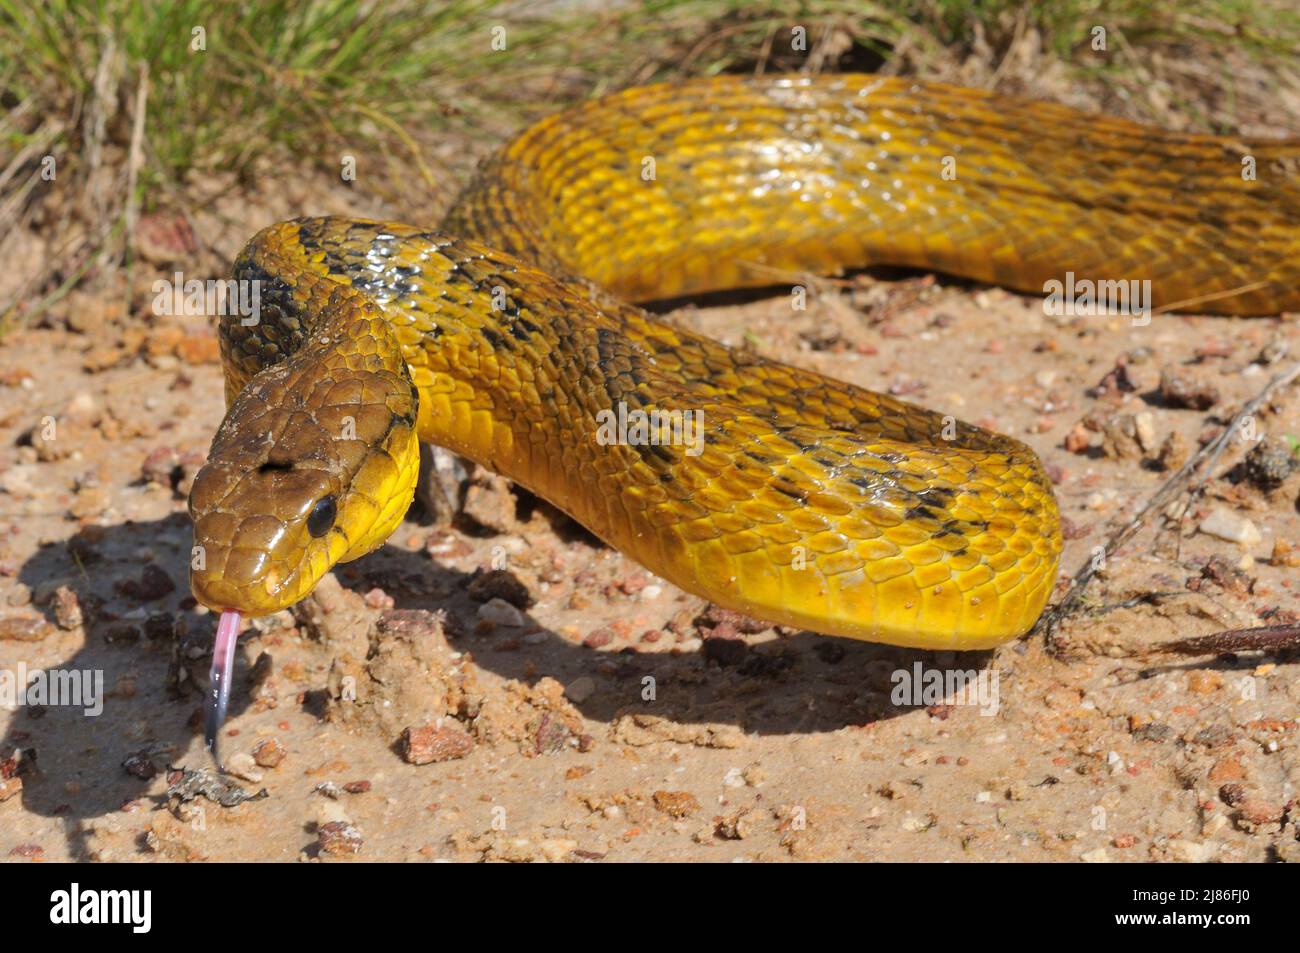 Yellow-bellied puffing snake crawling French Guiana Stock Photo